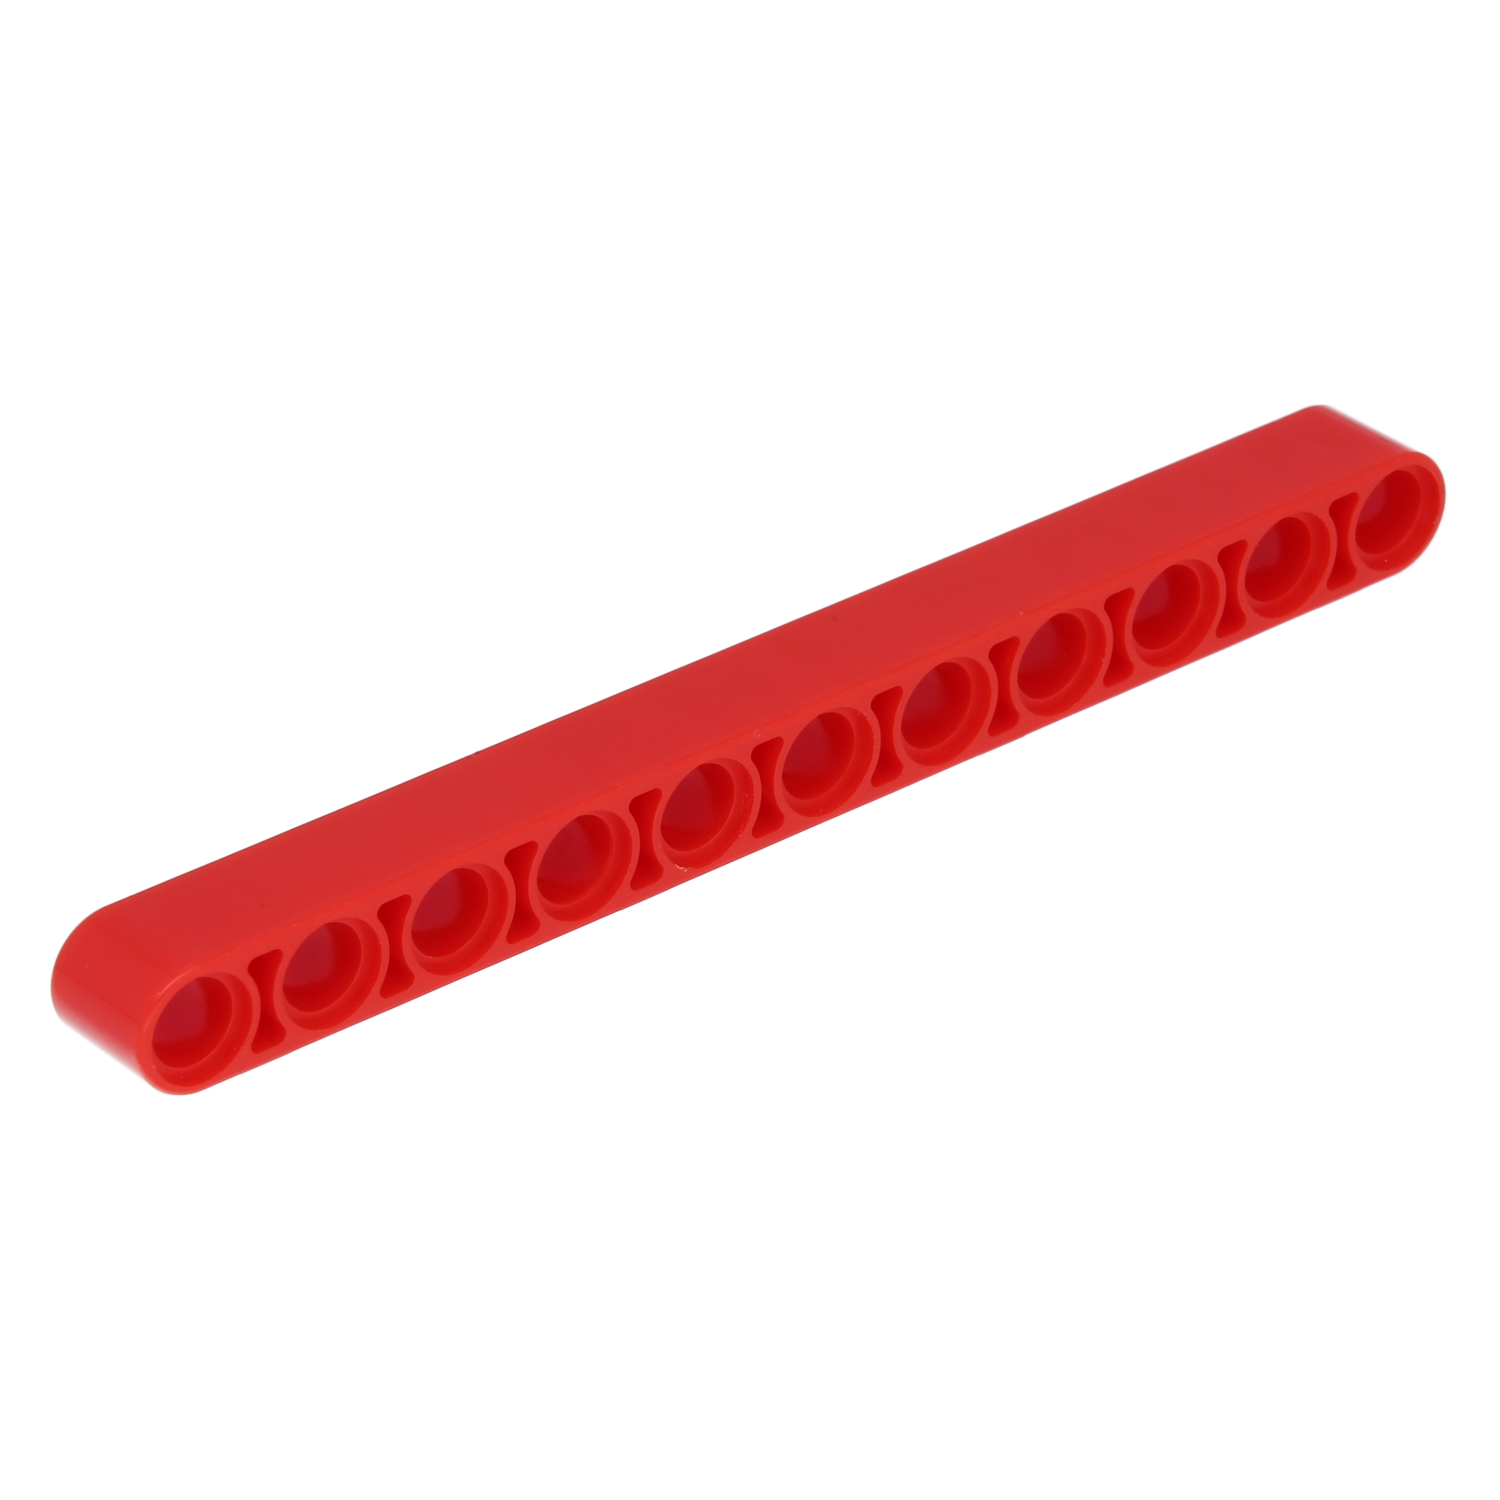 LEGO Technic Lift Arm - 1 x 11 (thick)